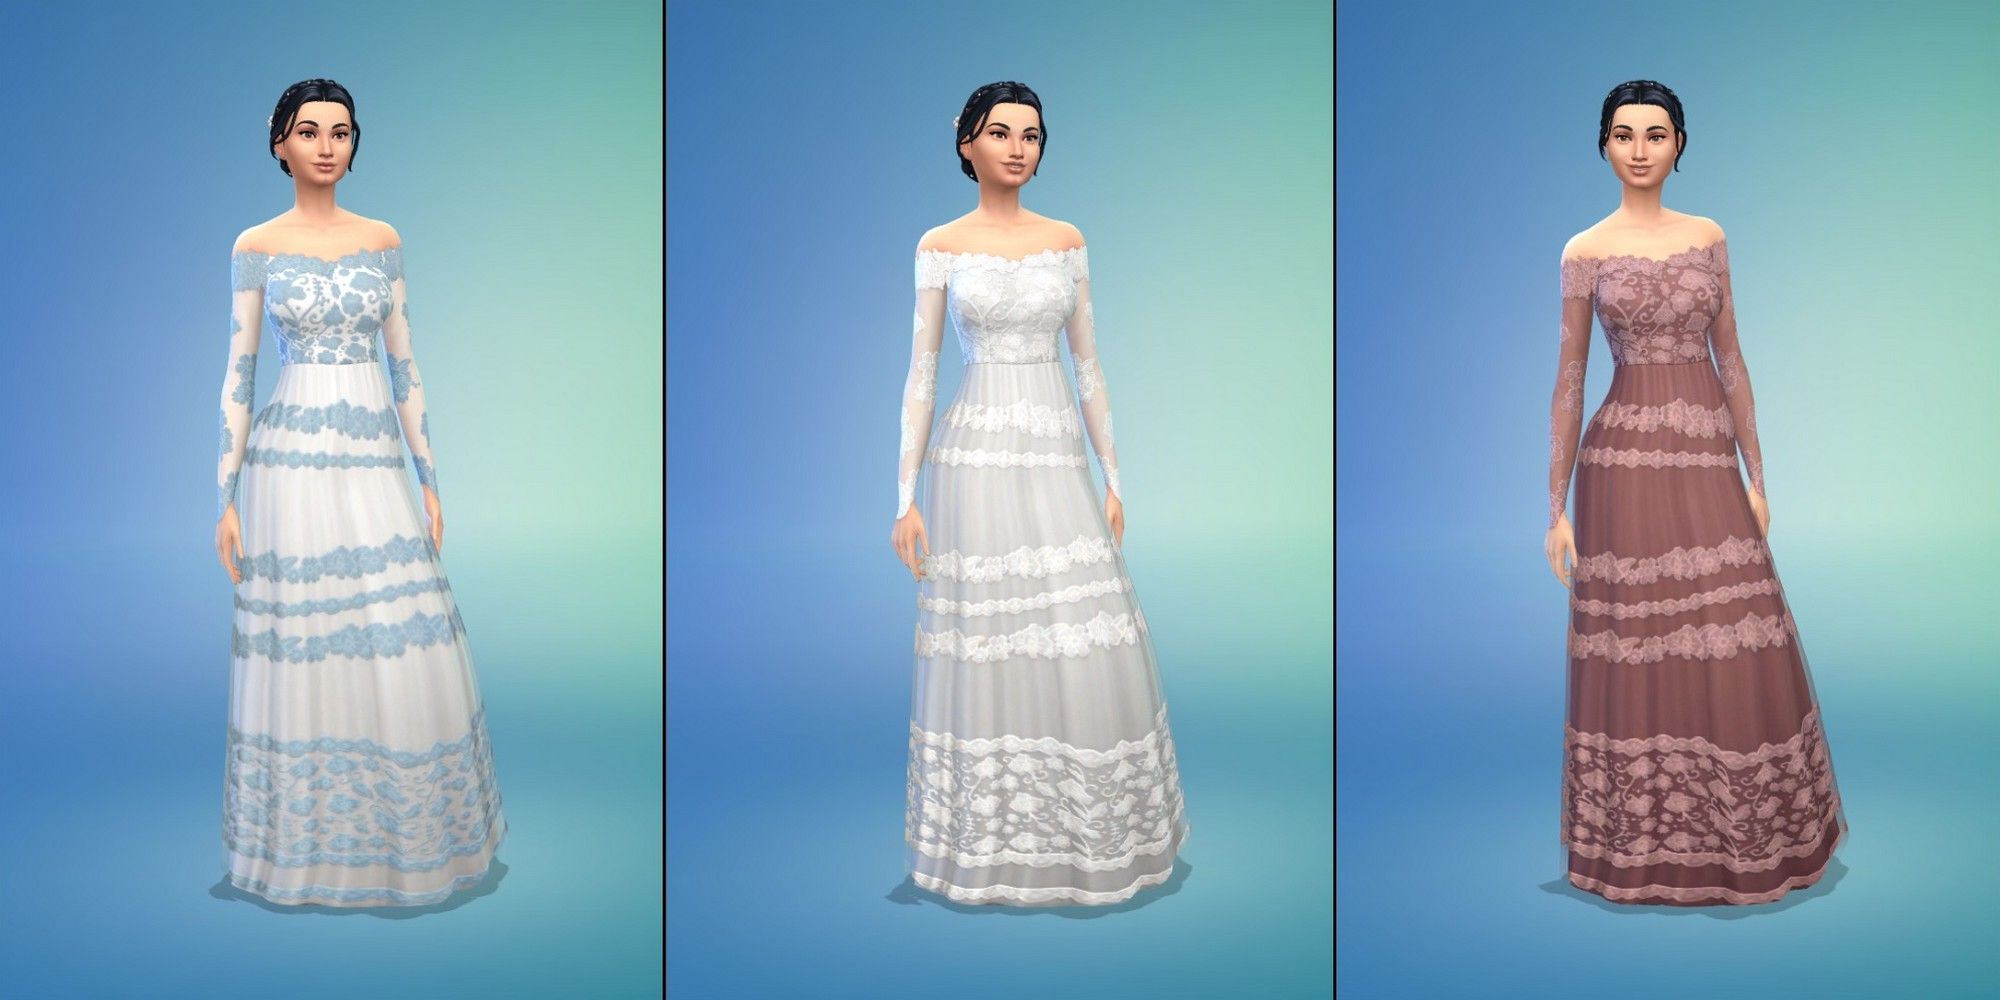 Sims 4 Wedding Dress Vintage Lace Off The Shoulder